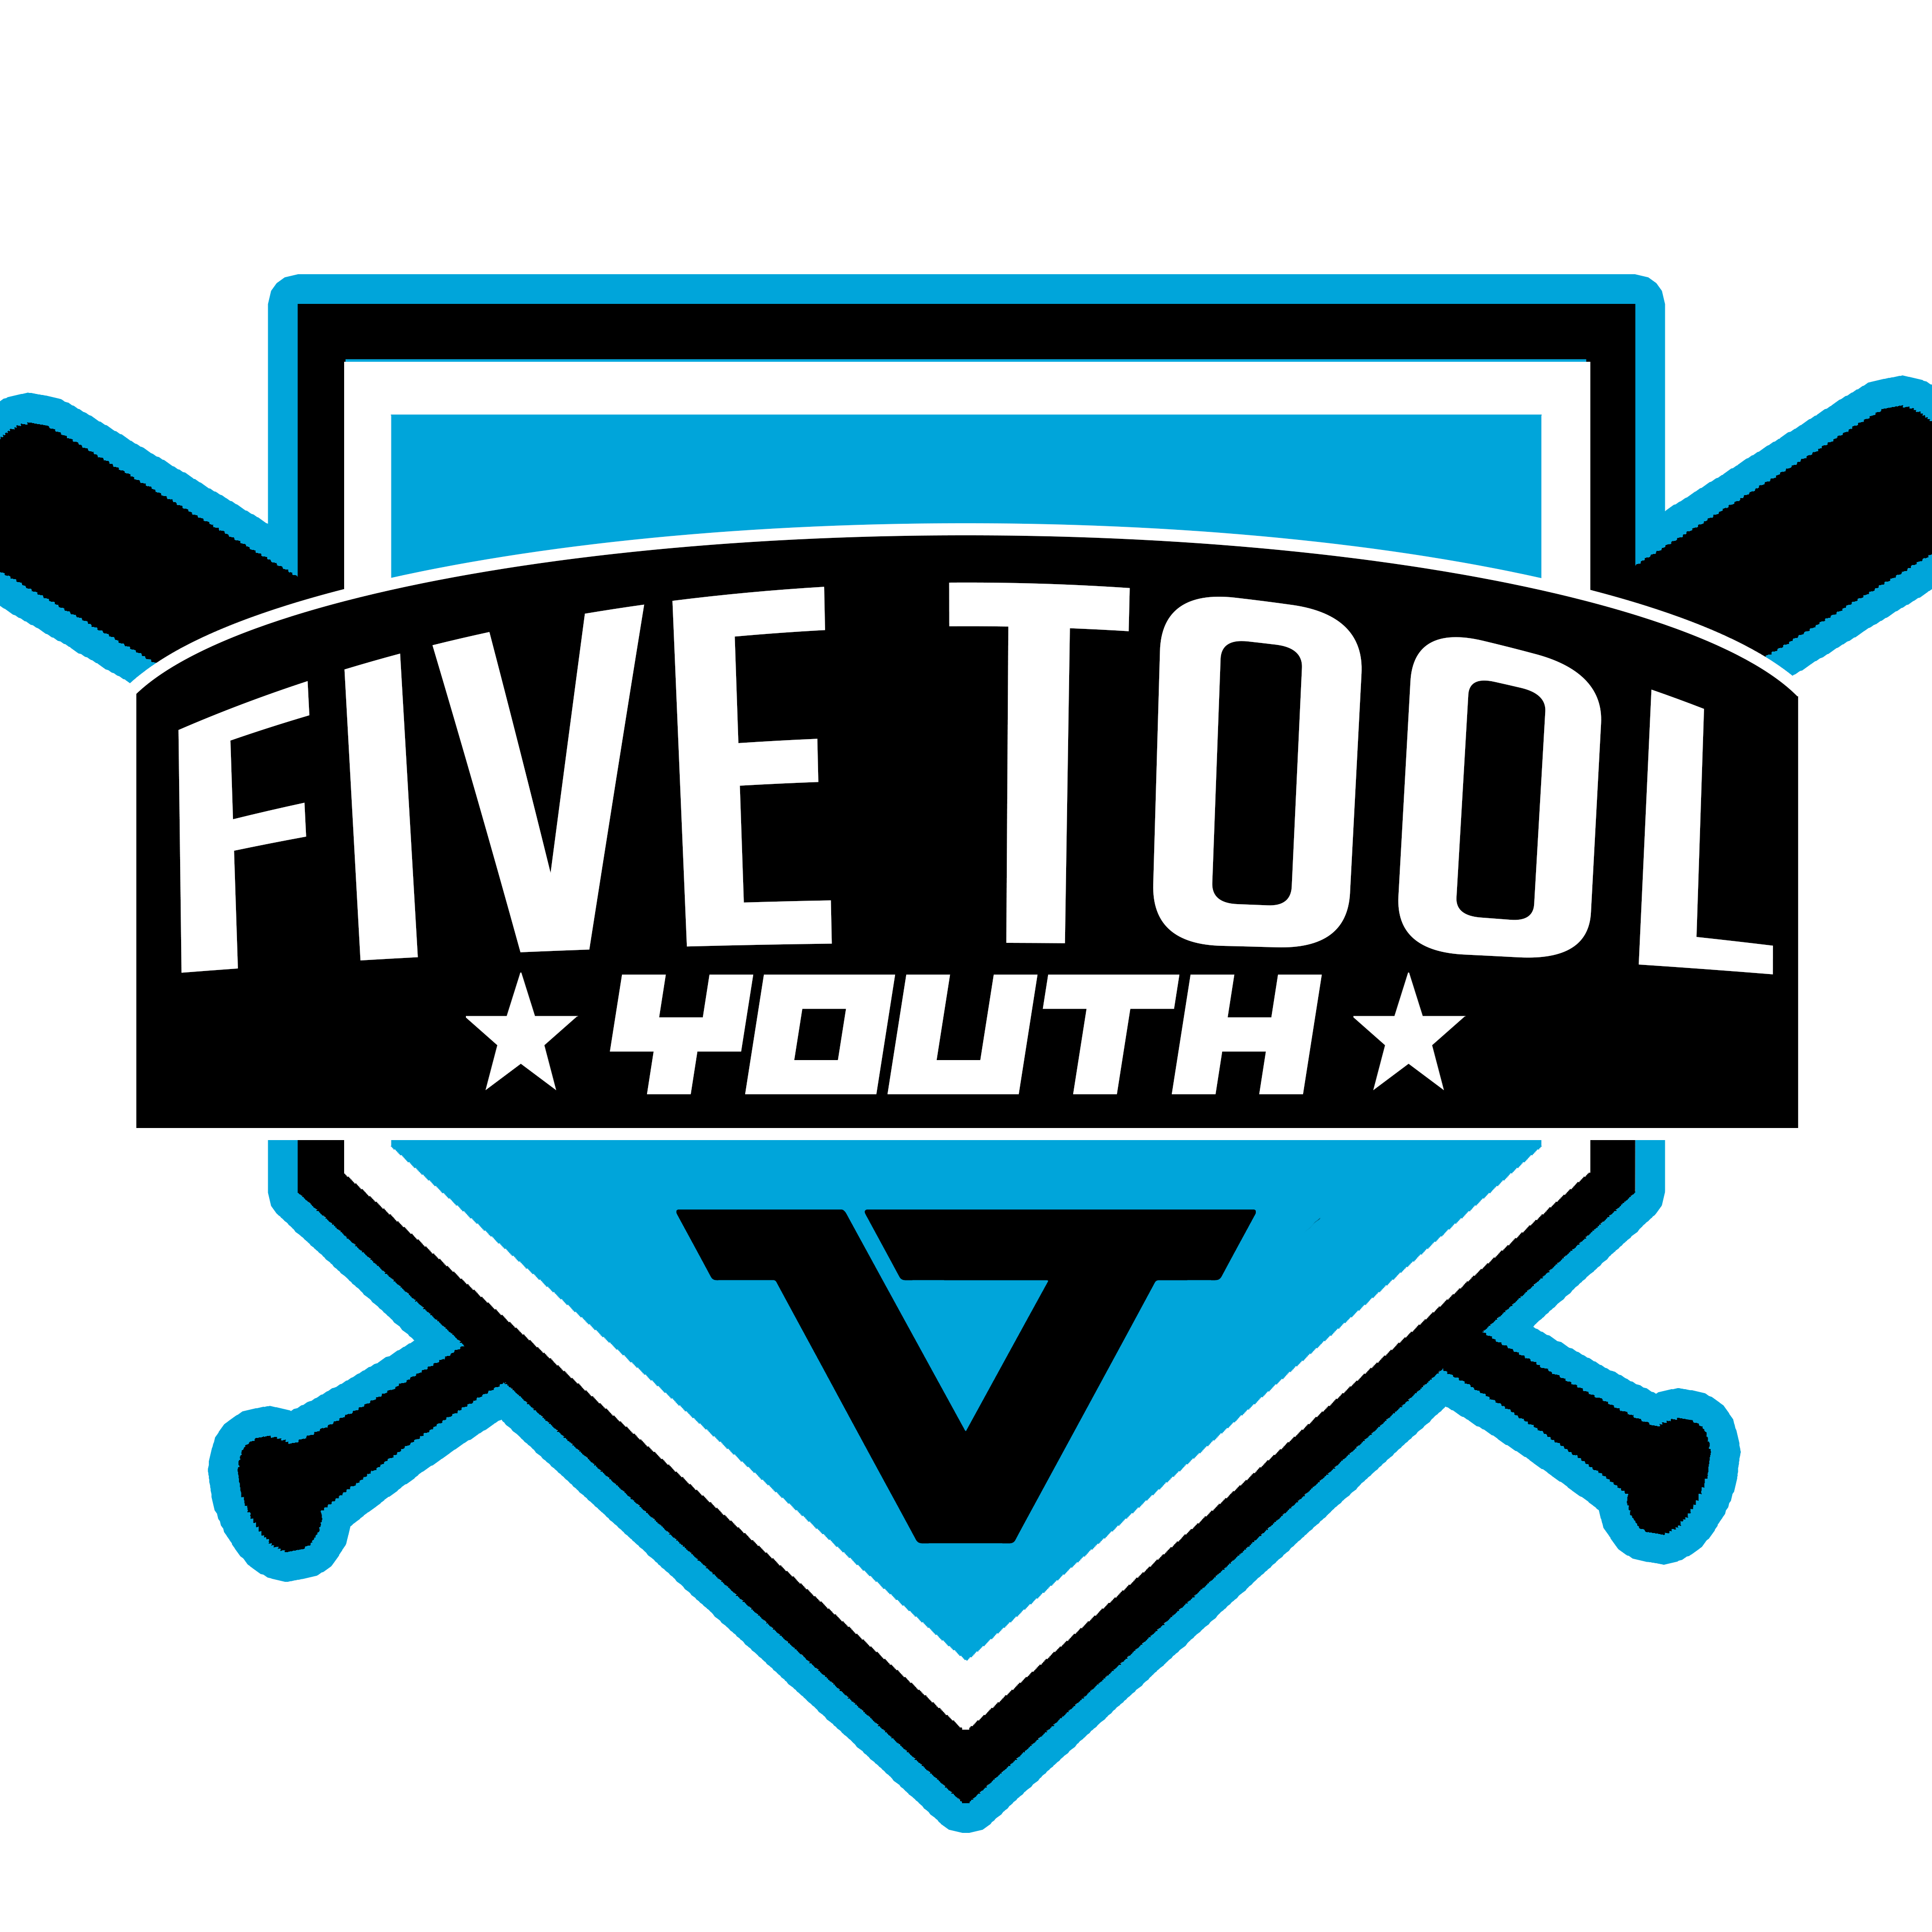 Five Tool Youth - Texas 20 Austin